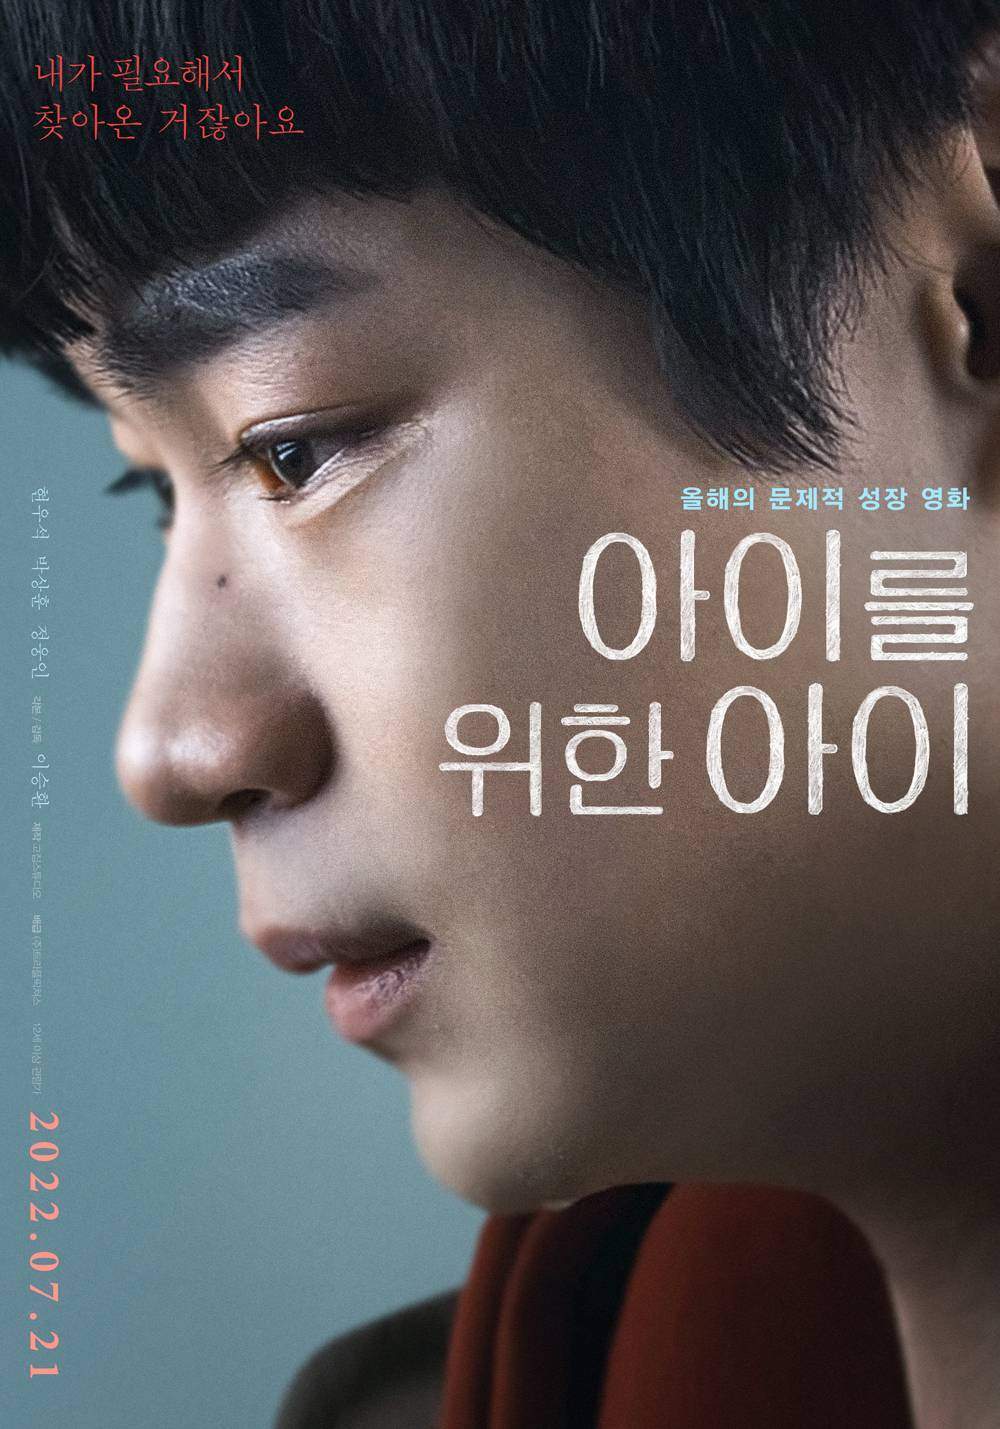 Korean Movies Opening Today 2022/07/21 in Korea @ HanCinema